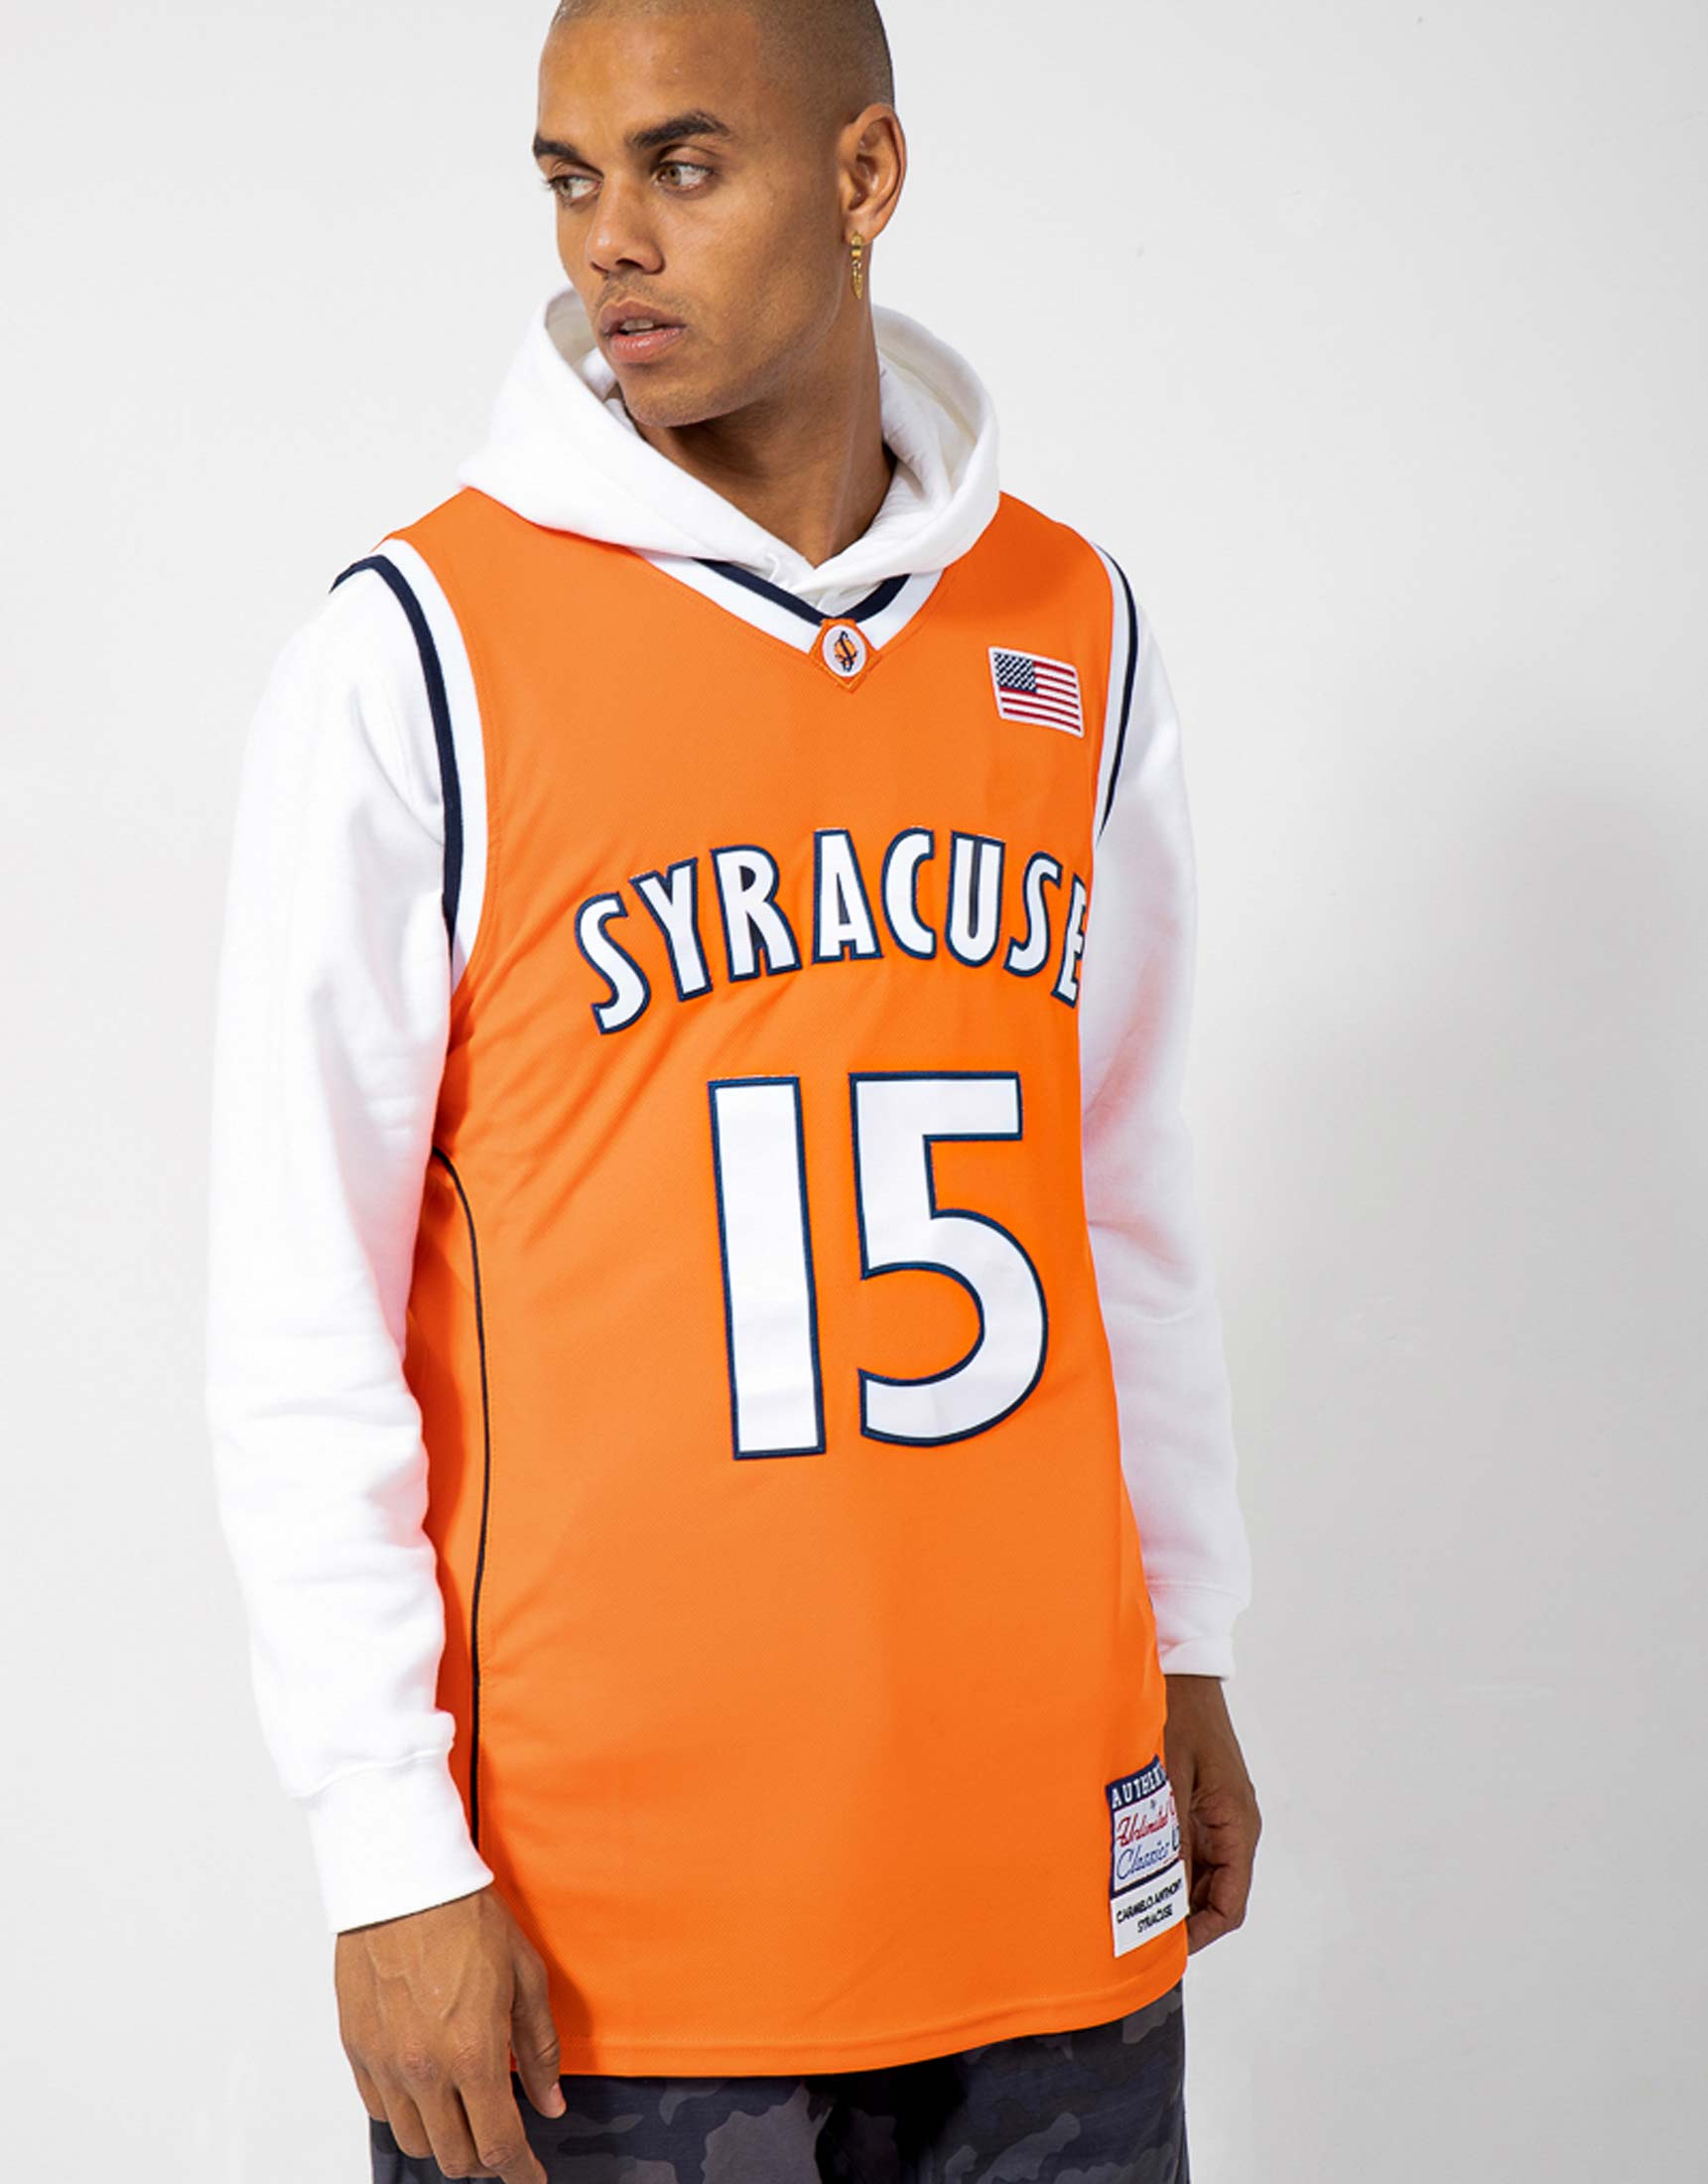 Retro Brand Men's Carmelo Anthony Syracuse Orange Throwback Jersey